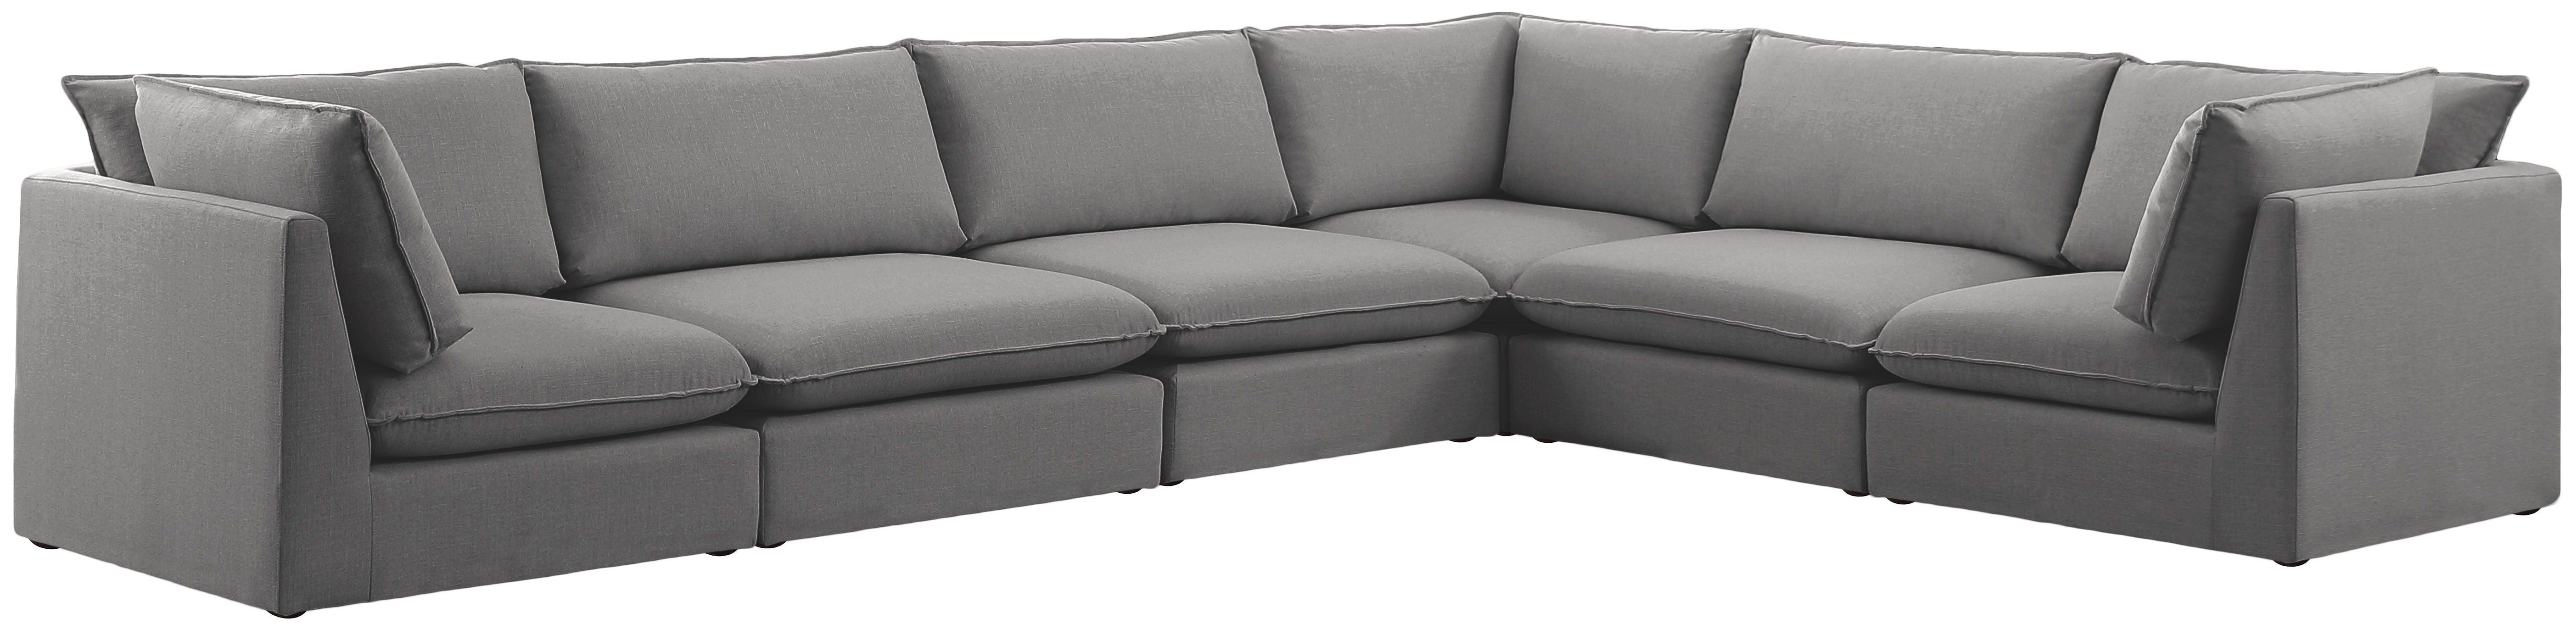 Meridian Furniture - Mackenzie - Modular Sectional 6 Piece - Gray - Fabric - 5th Avenue Furniture